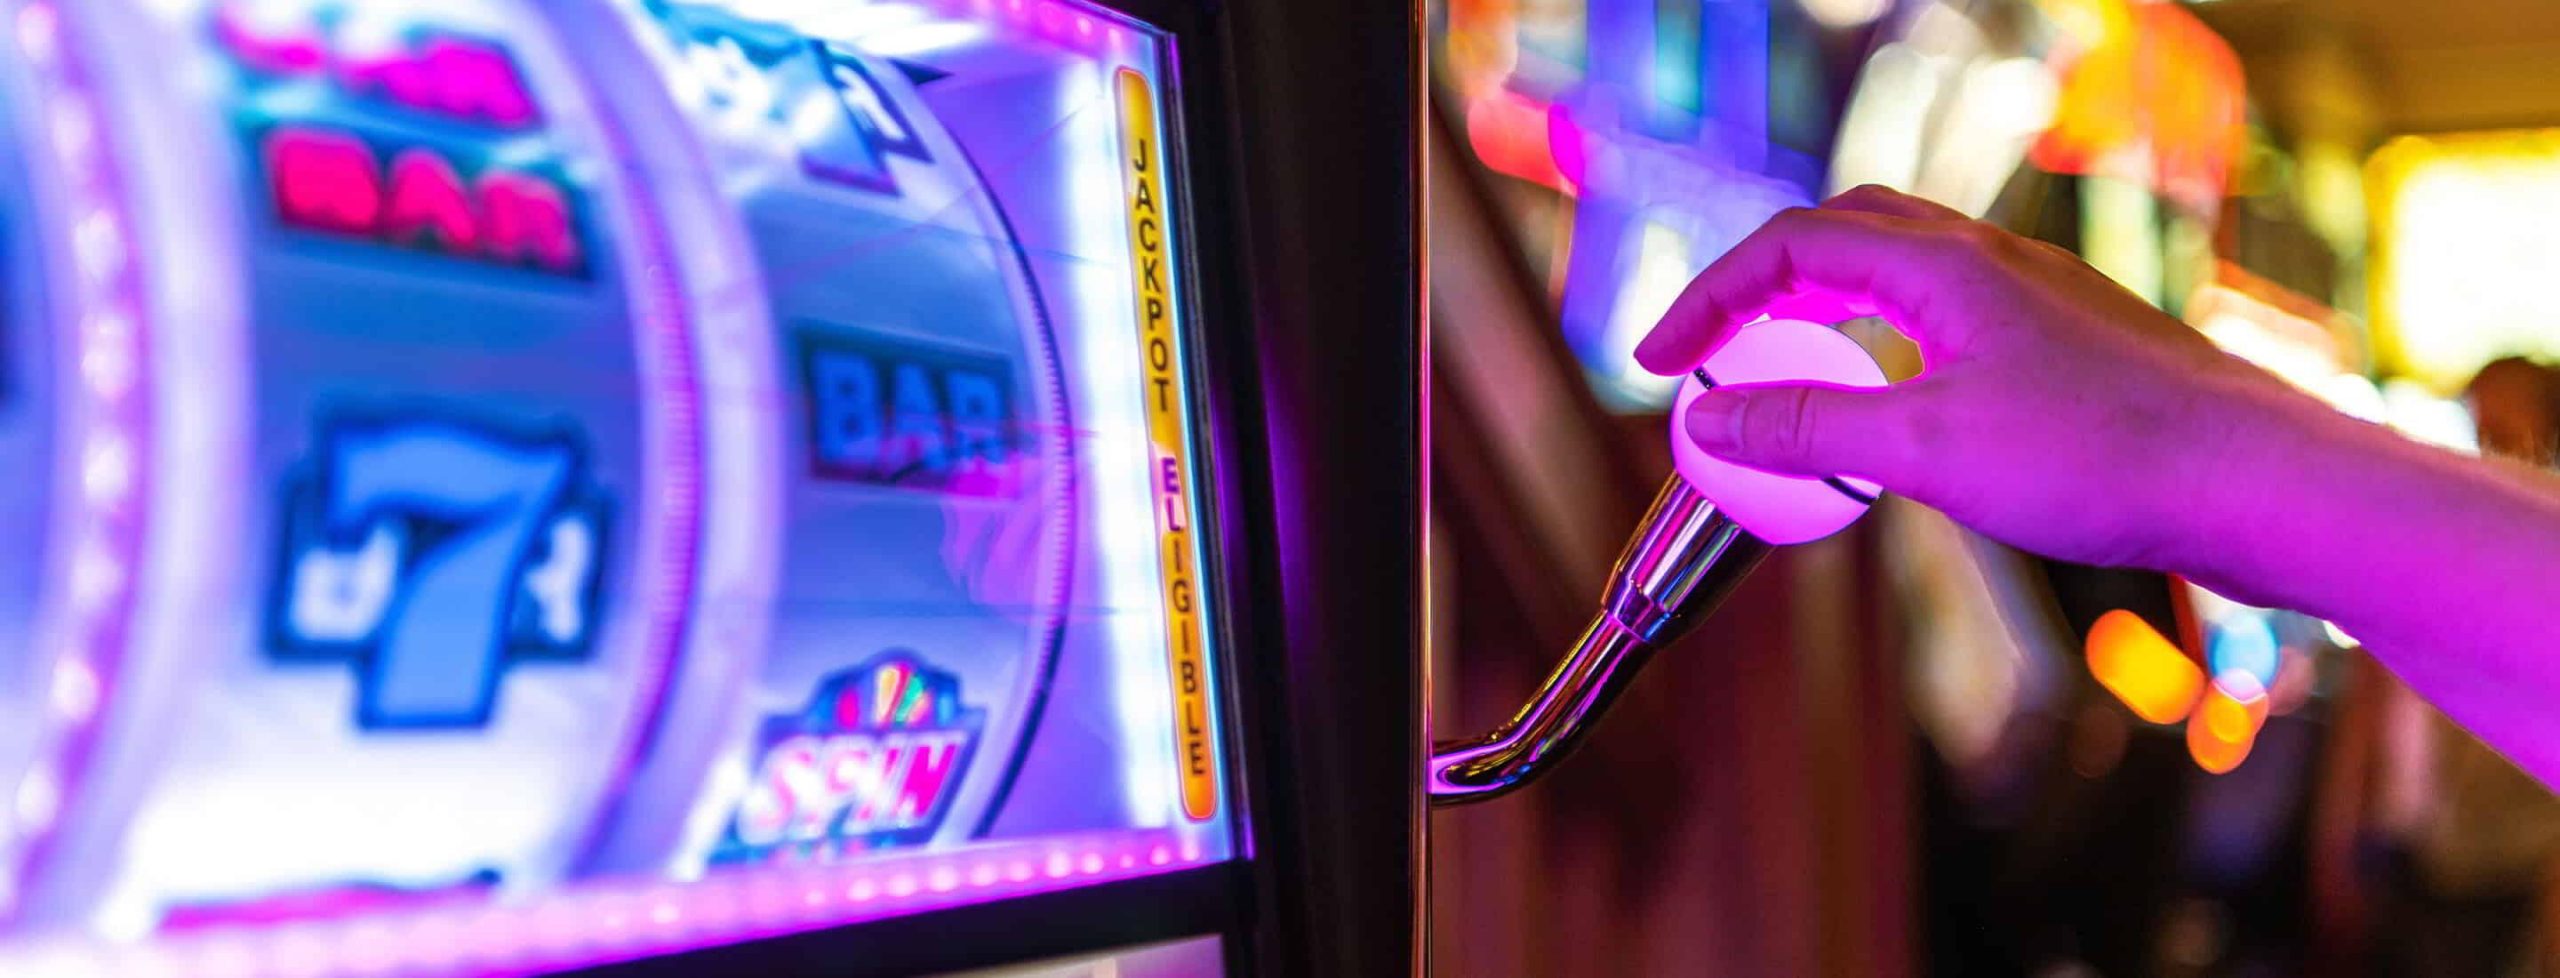 Play Lucks Casino Slots Site, Big Payouts & Rewards - Up to $/€/£200 Bonus!